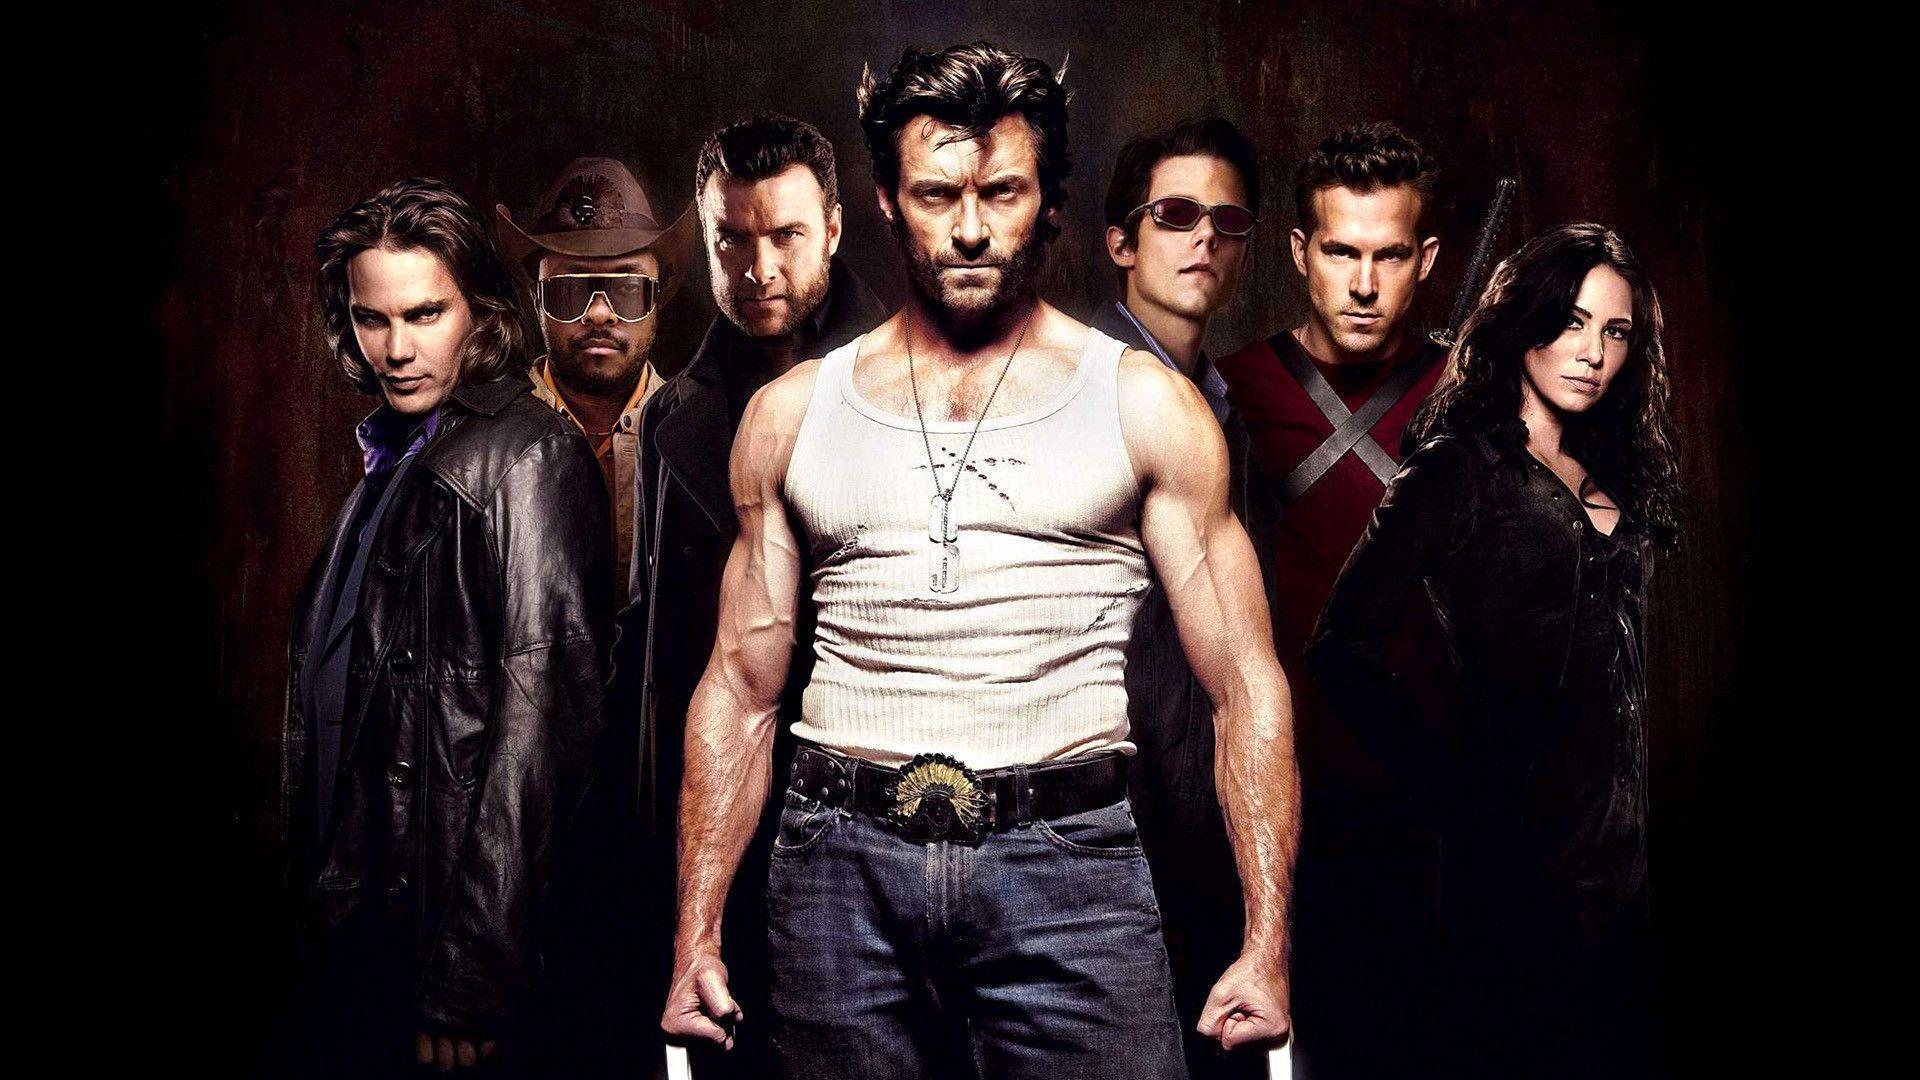 X Men Origins: Wolverine (2009) Movie In HD And Wallpaper